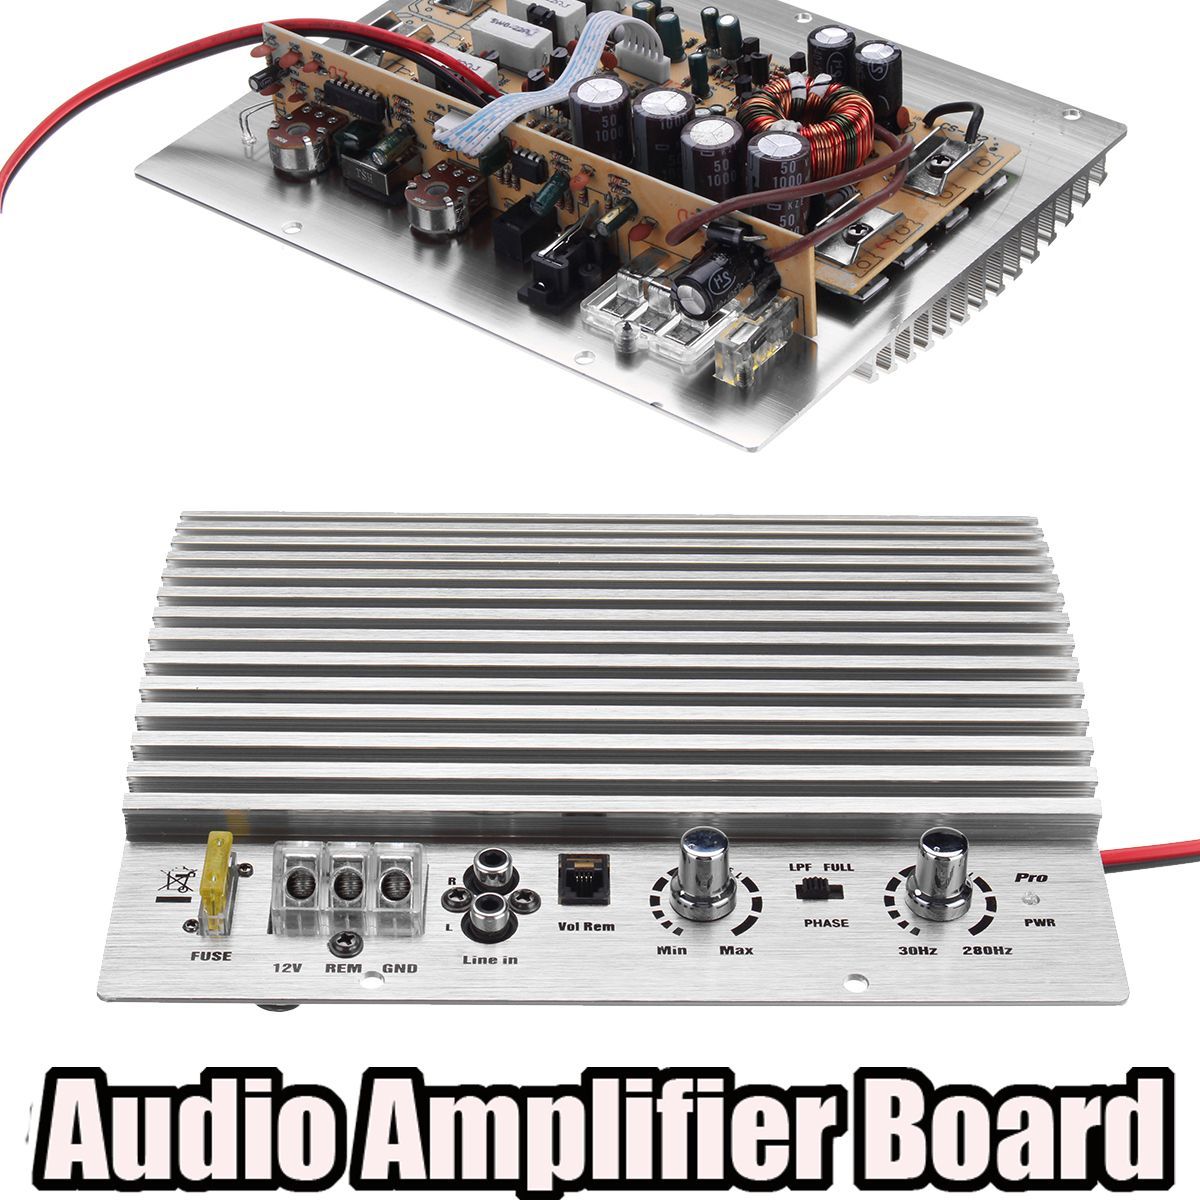 12V-1000W-Mono-Car-Audio-High-Power-Amplifier-Board-Powerful-Bass-Subwoofer-Amp-1273800